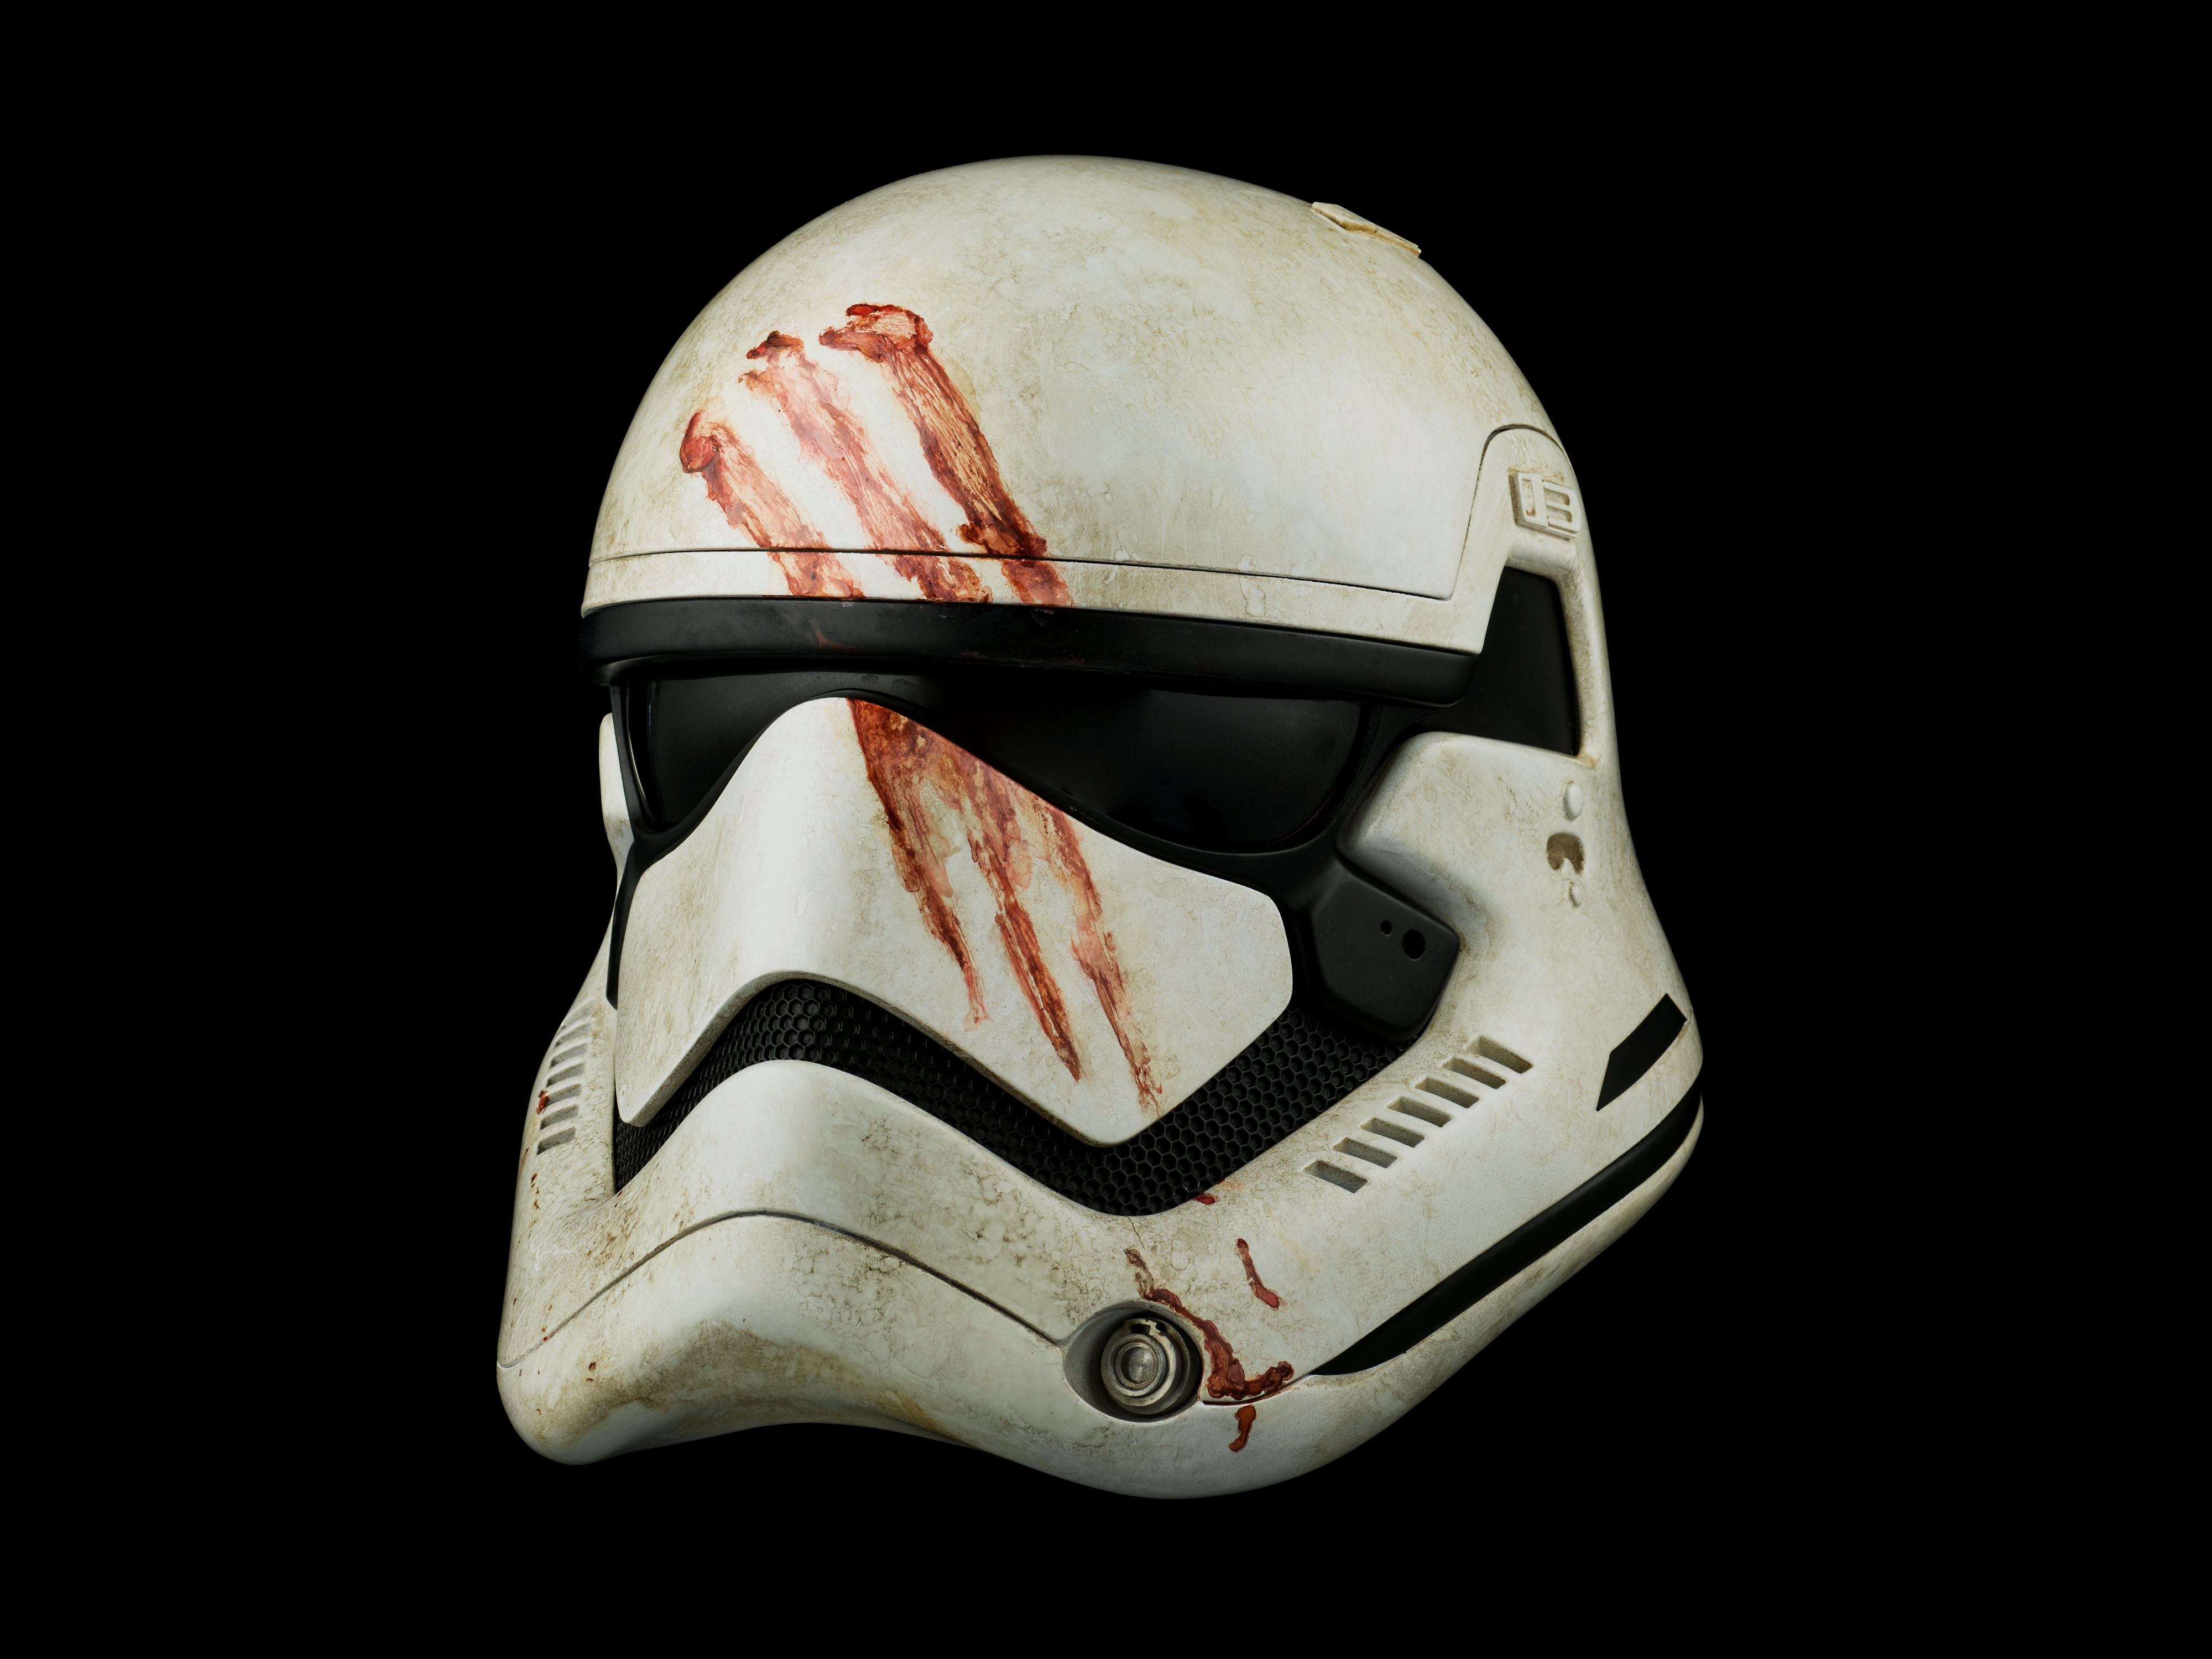 Movie Star Wars The Force Awakens Shoretroopers Cosplay Replica Helmet Mask Prop 